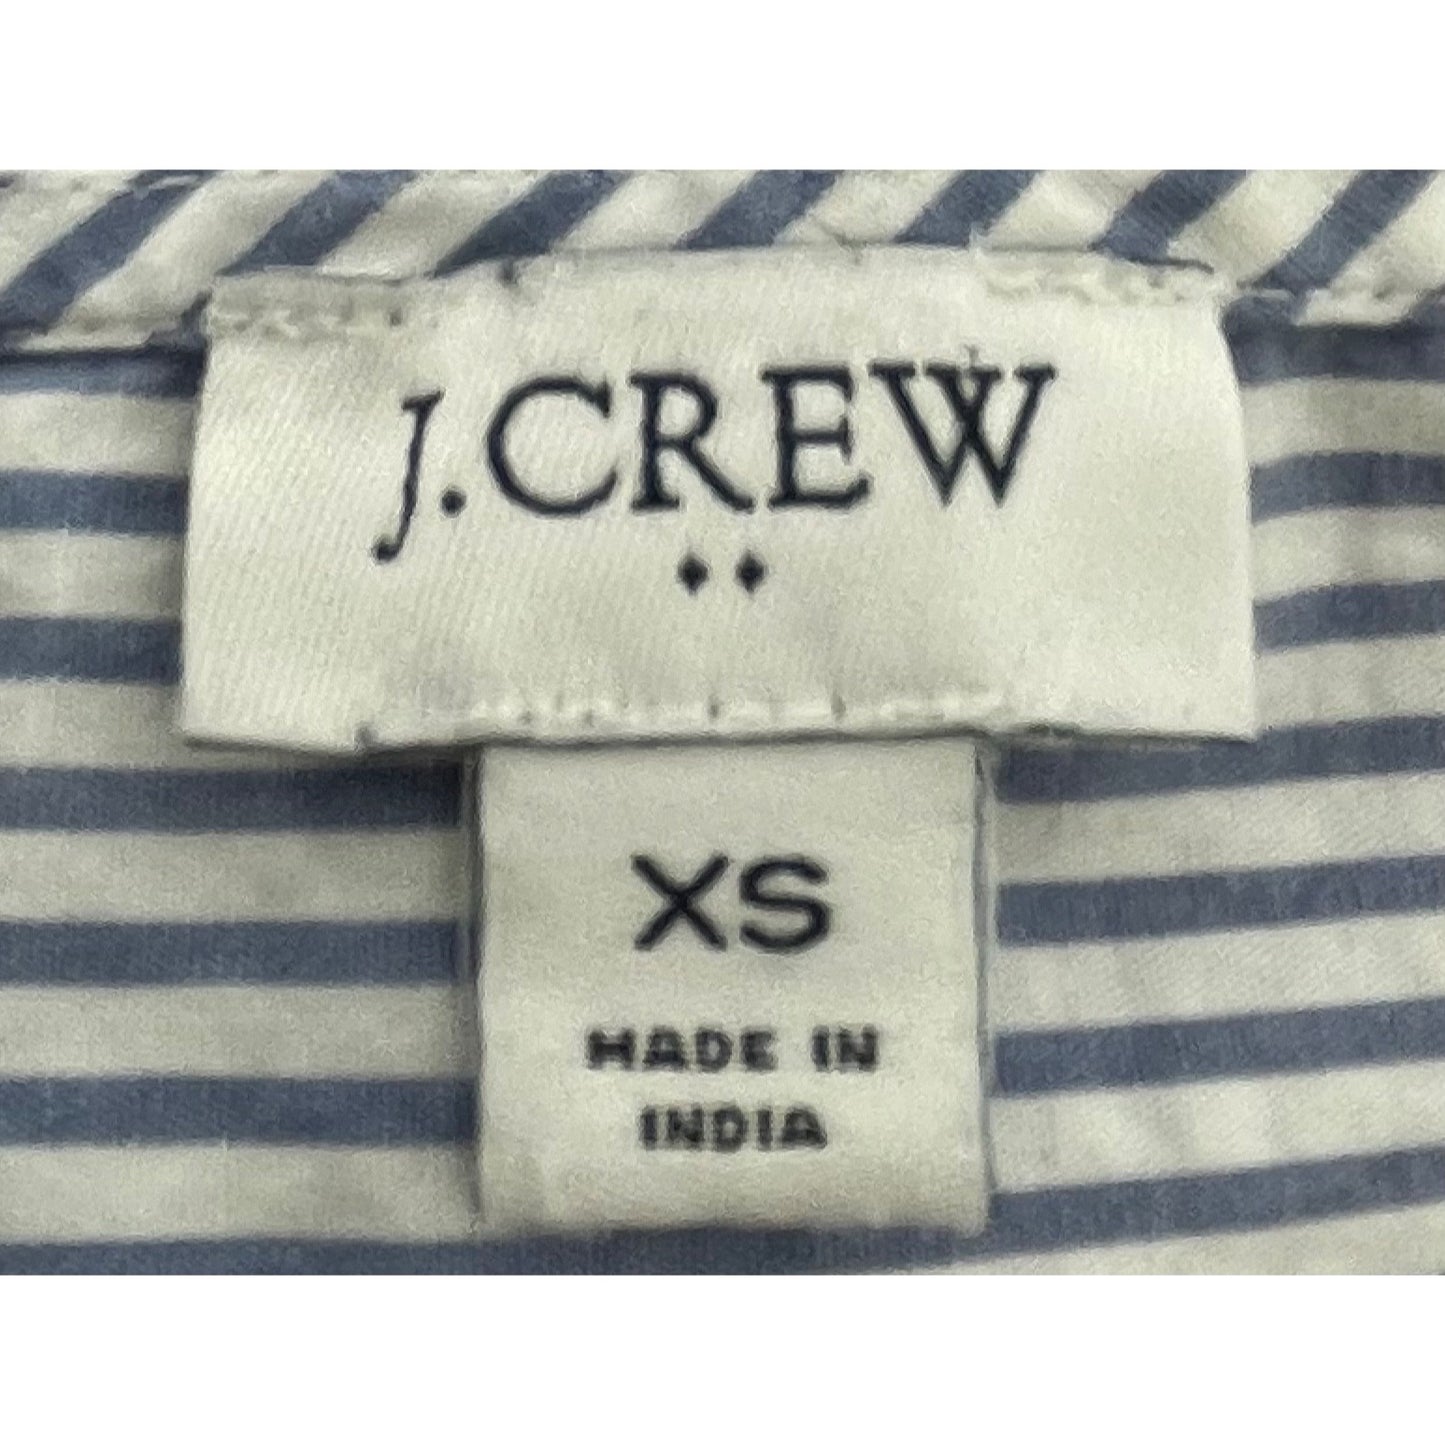 J. Crew Women's Size XS Light Blue & White Pinstriped Long-Sleeved Top